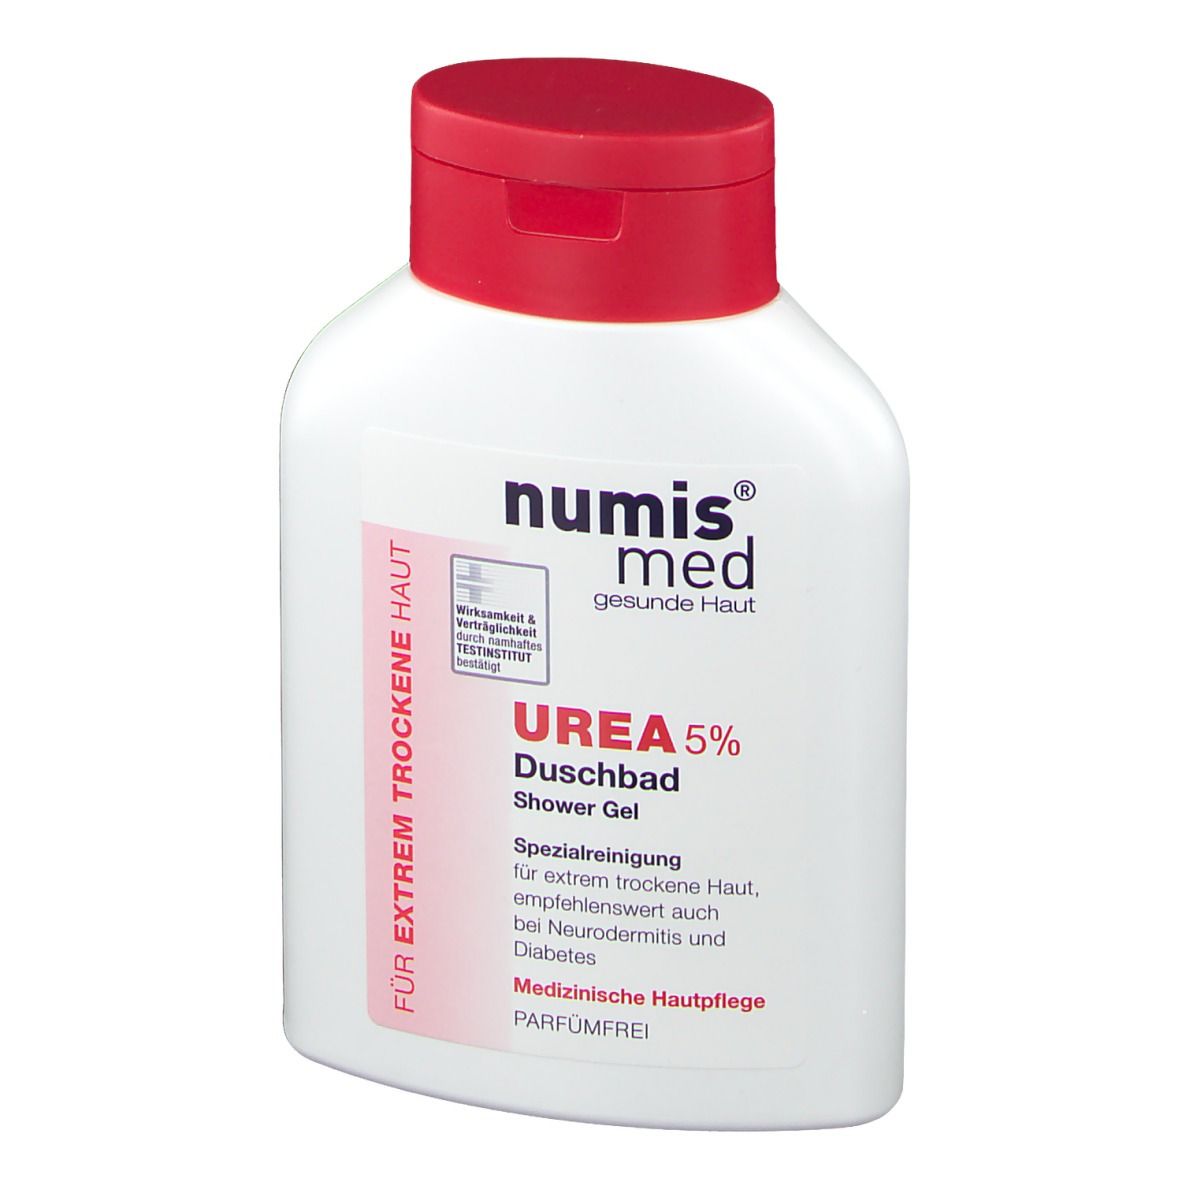 numis® med UREA 5% Duschbad